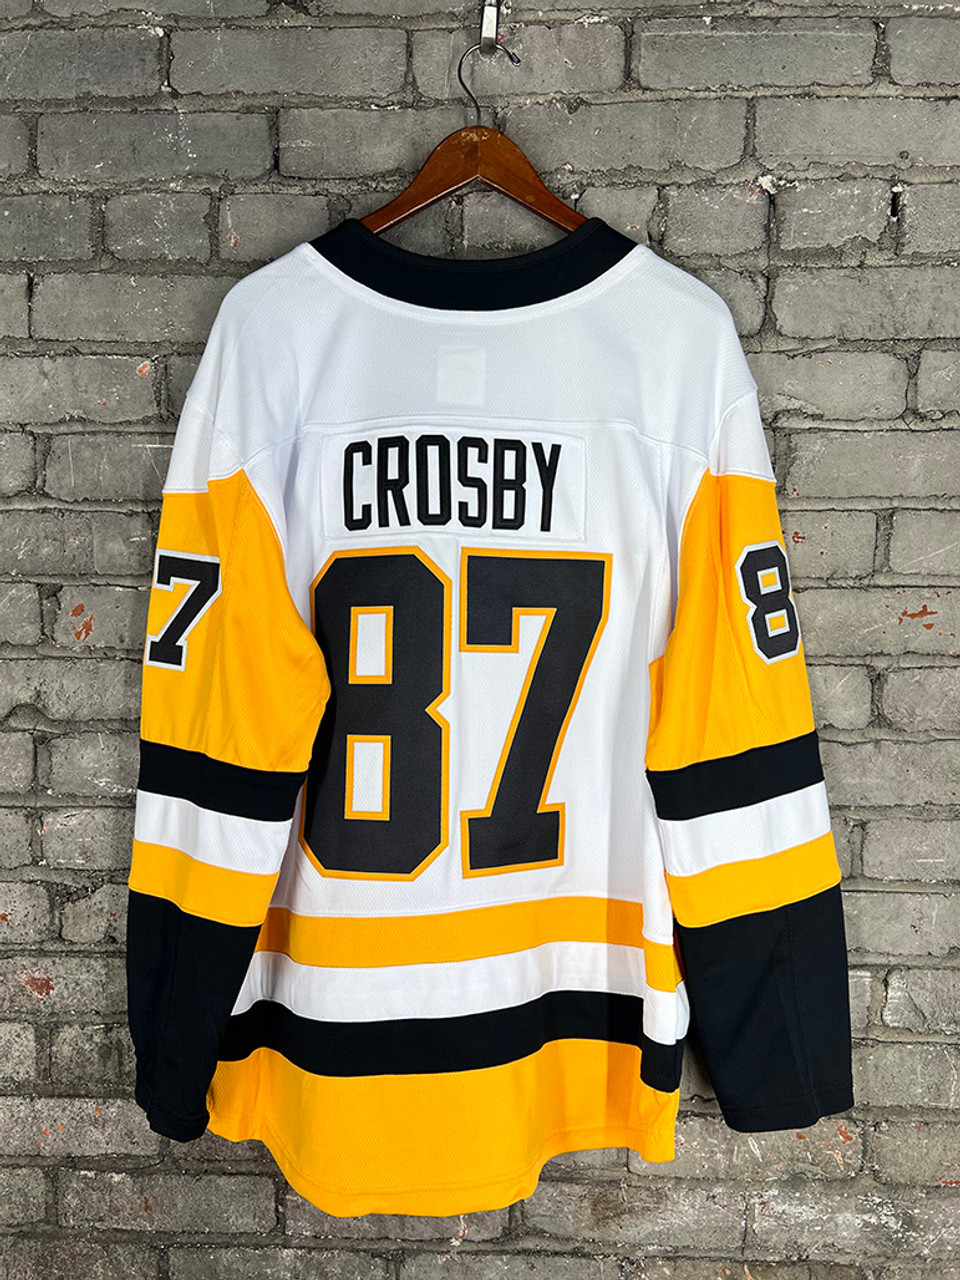 #59 Guentzel - Fanatics NHL Official Pittsburgh Penguins Jersey (Black)